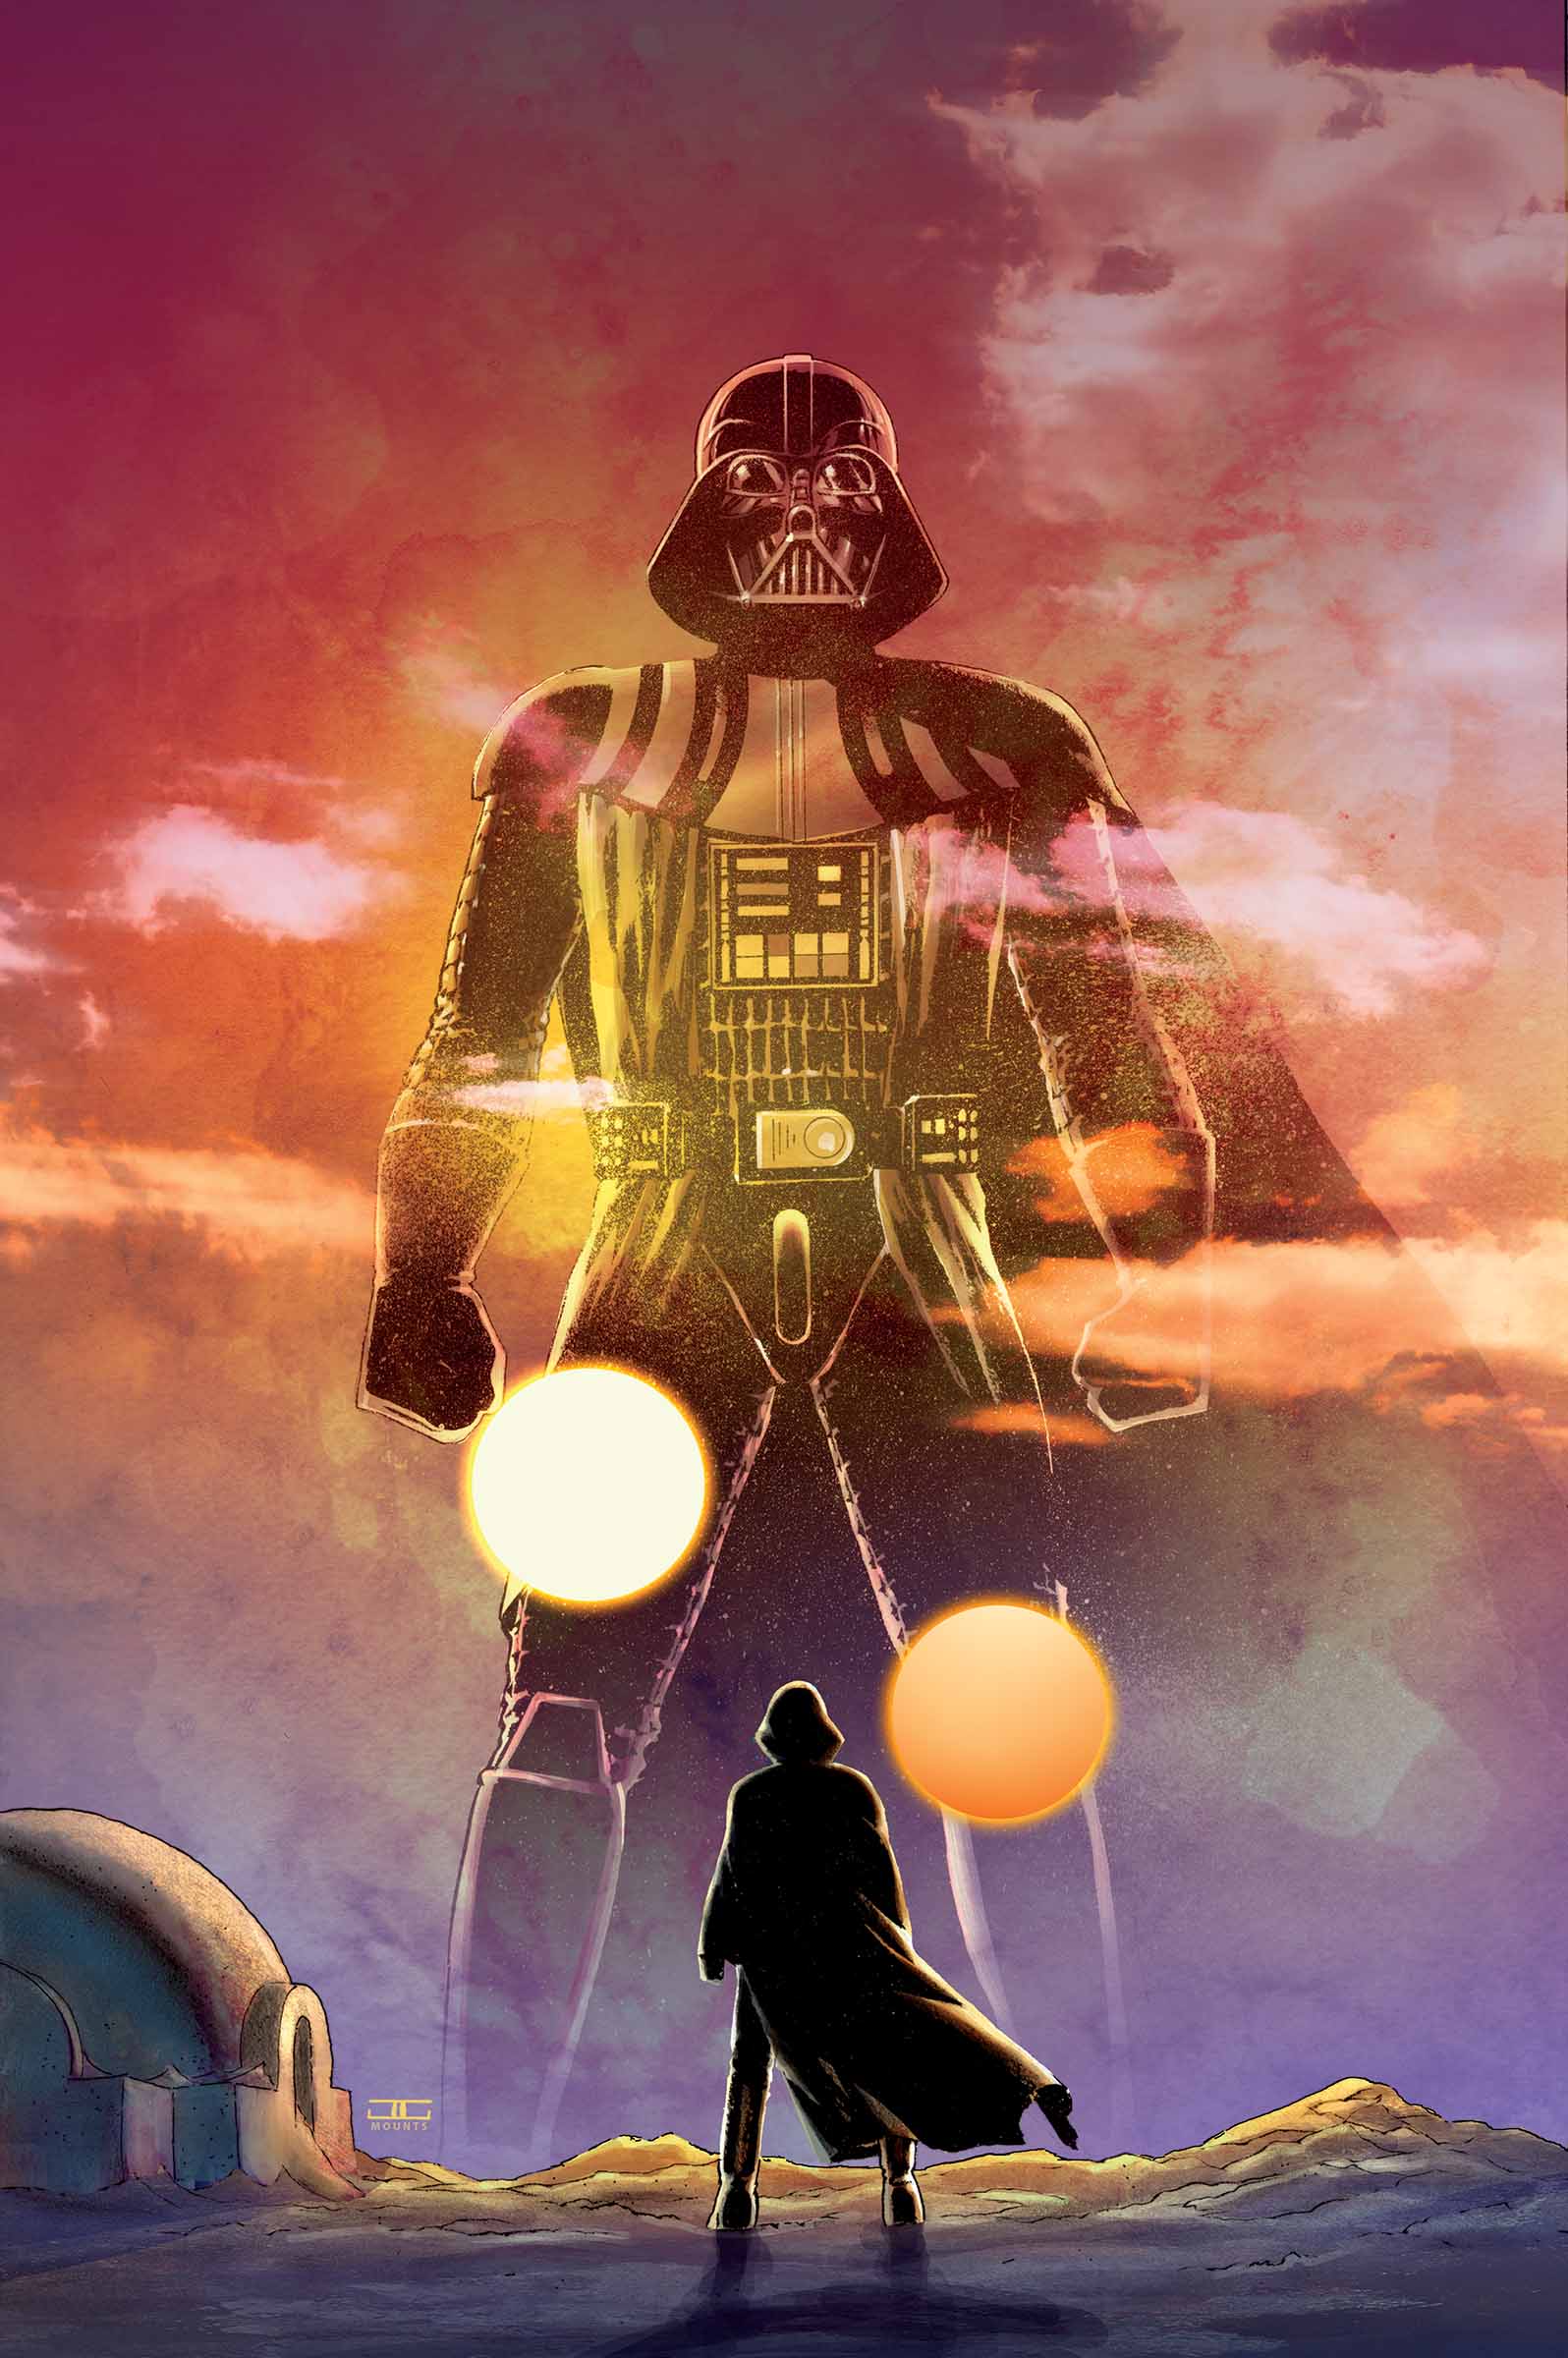 Plik:Star Wars 4 cover art.jpg